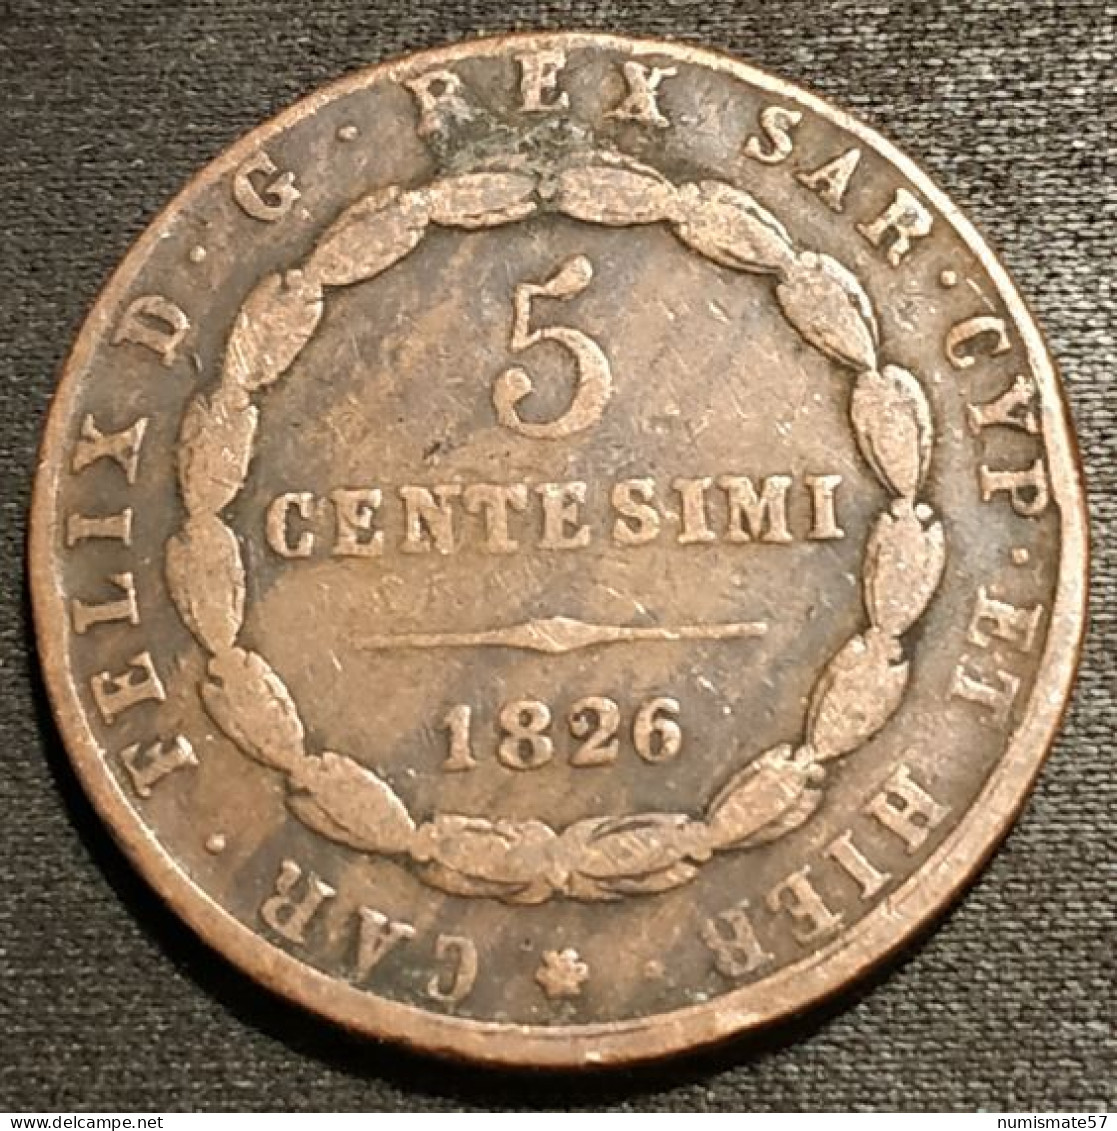 ITALIE - ITALIA - 5 CENTESIMI 1826 L - Carolus Felix - KM 127.1 ( Royaume De Sardaigne ) - Piémont-Sardaigne-Savoie Italienne